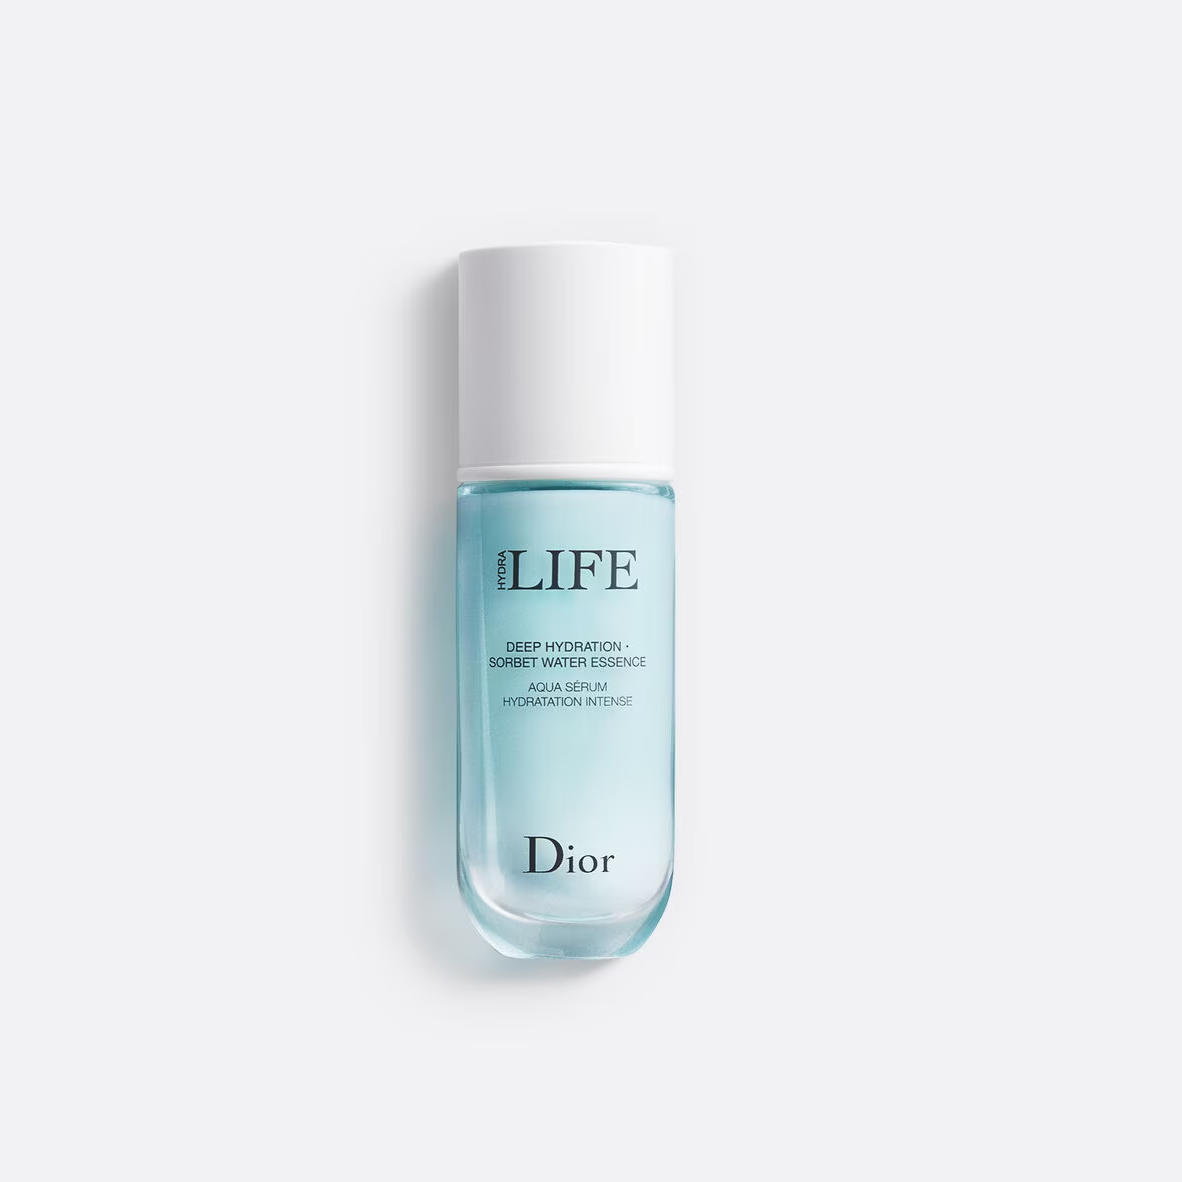 Dior Hydra Life Fresh Reviver Sorbet Water Mist 100 ml